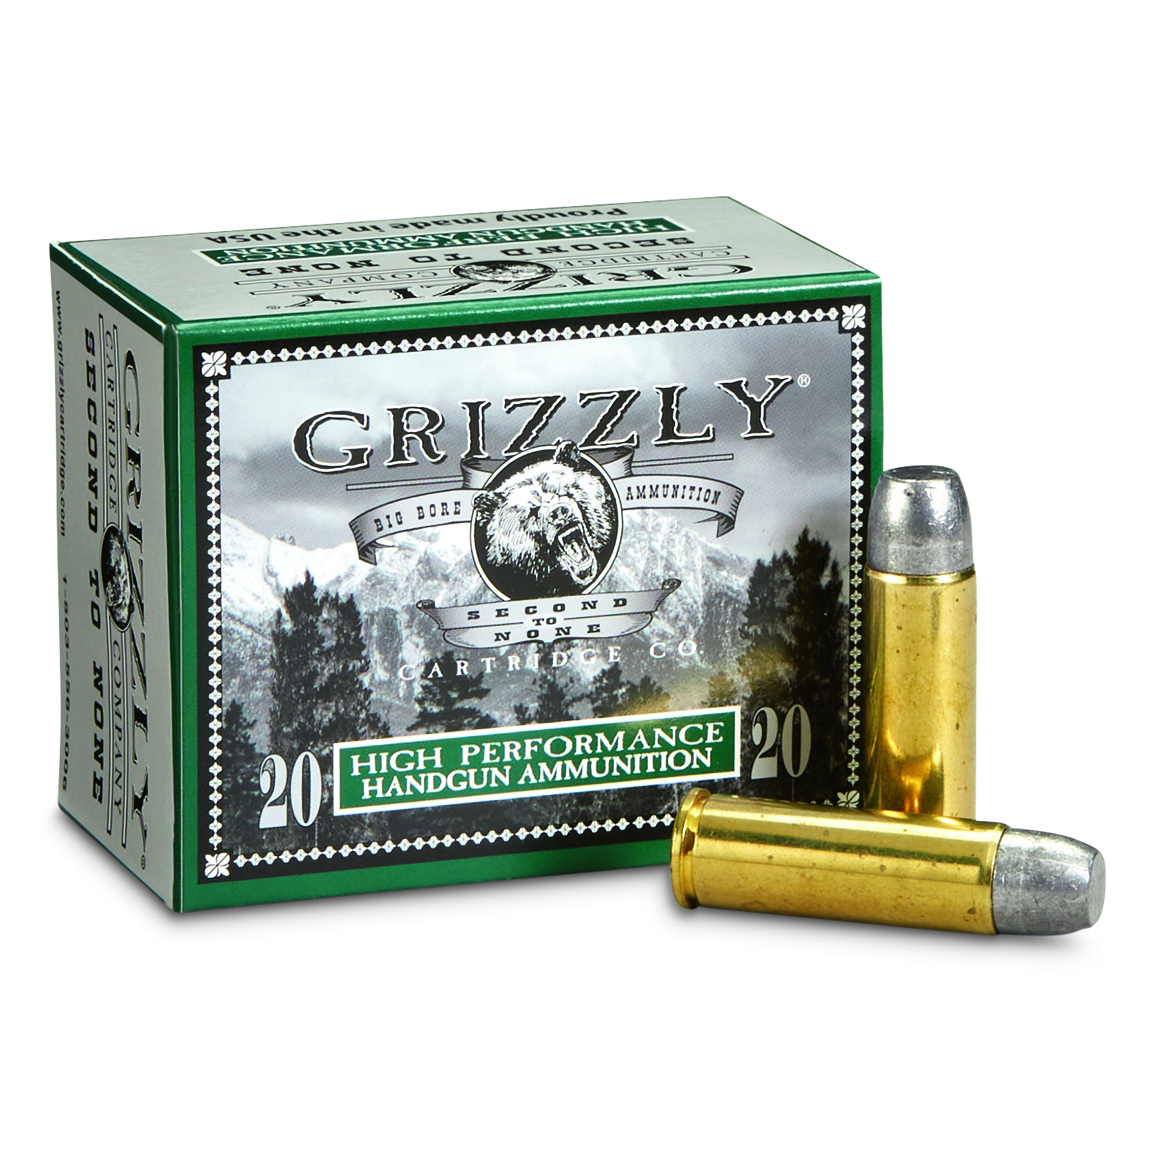 Grizzly Cartridge Co. High Performance Handgun, .454 Casull, WLNGC, 335 Grain, 20 Rounds